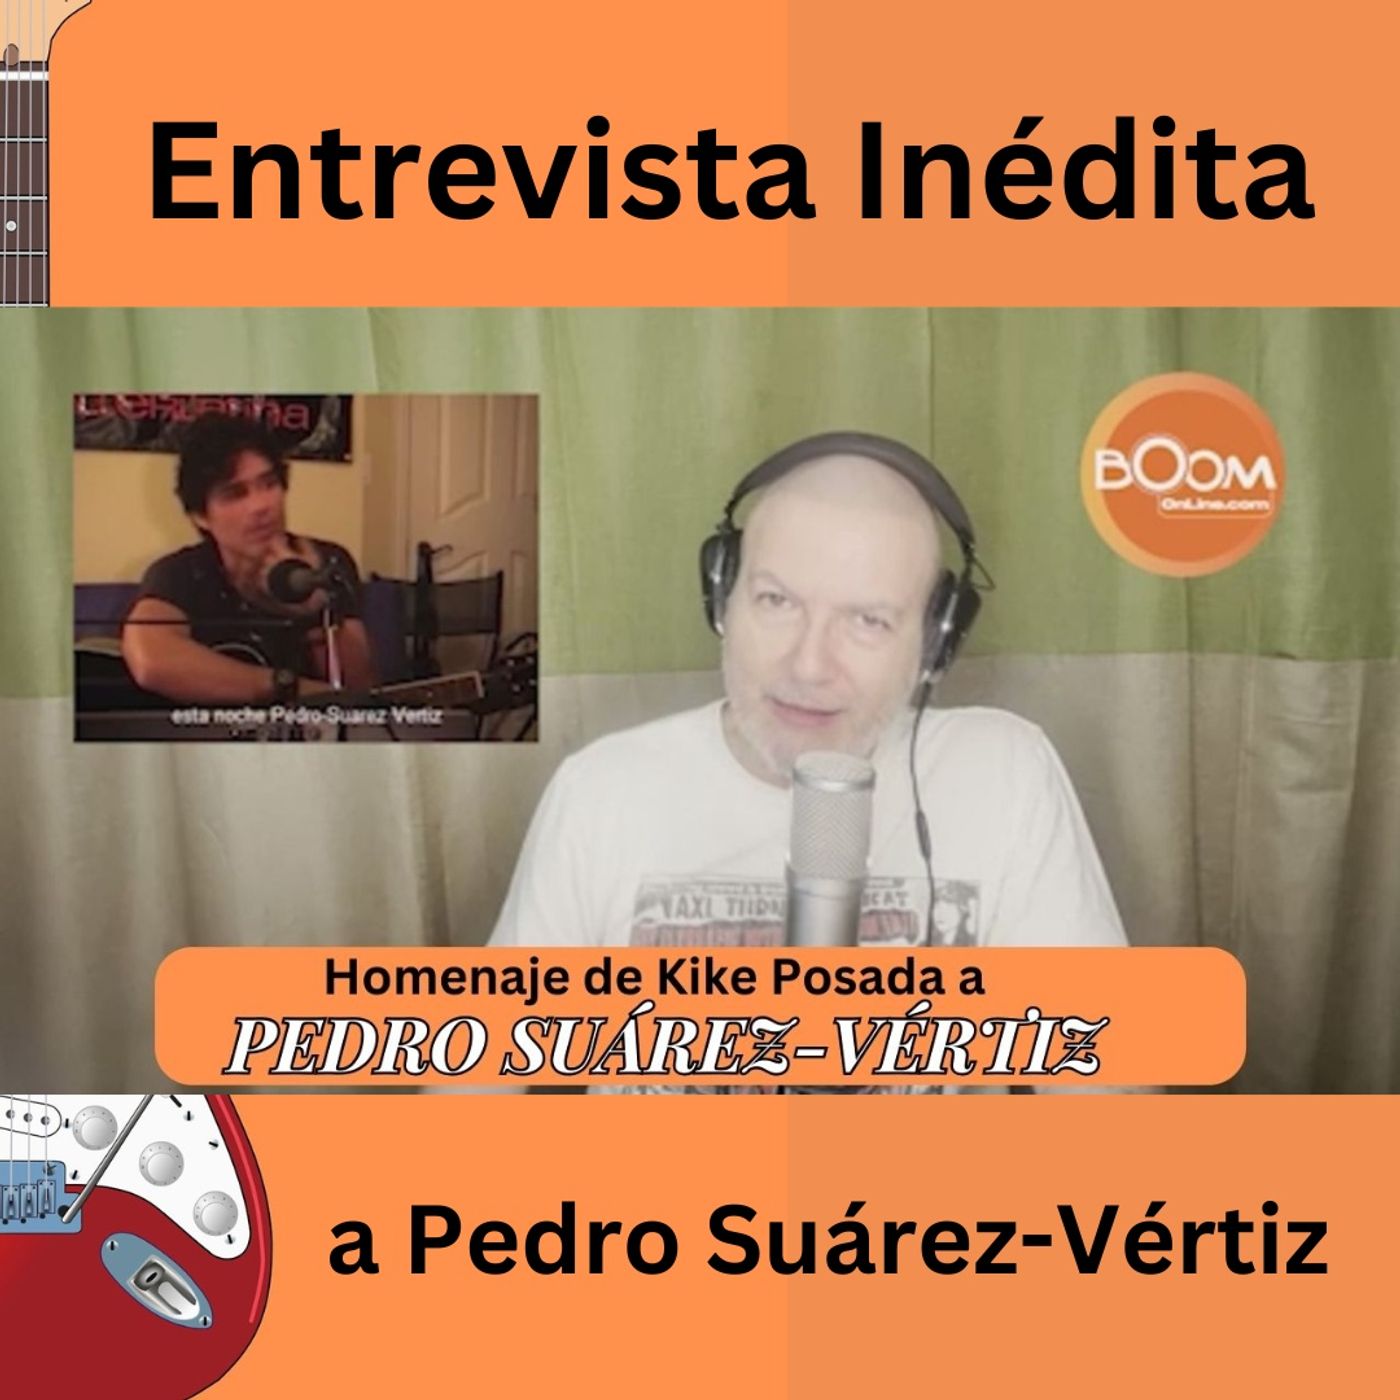 Homenaje a Pedro Suárez-Vértiz, entrevista rescatada de 2009, con Kike Posada